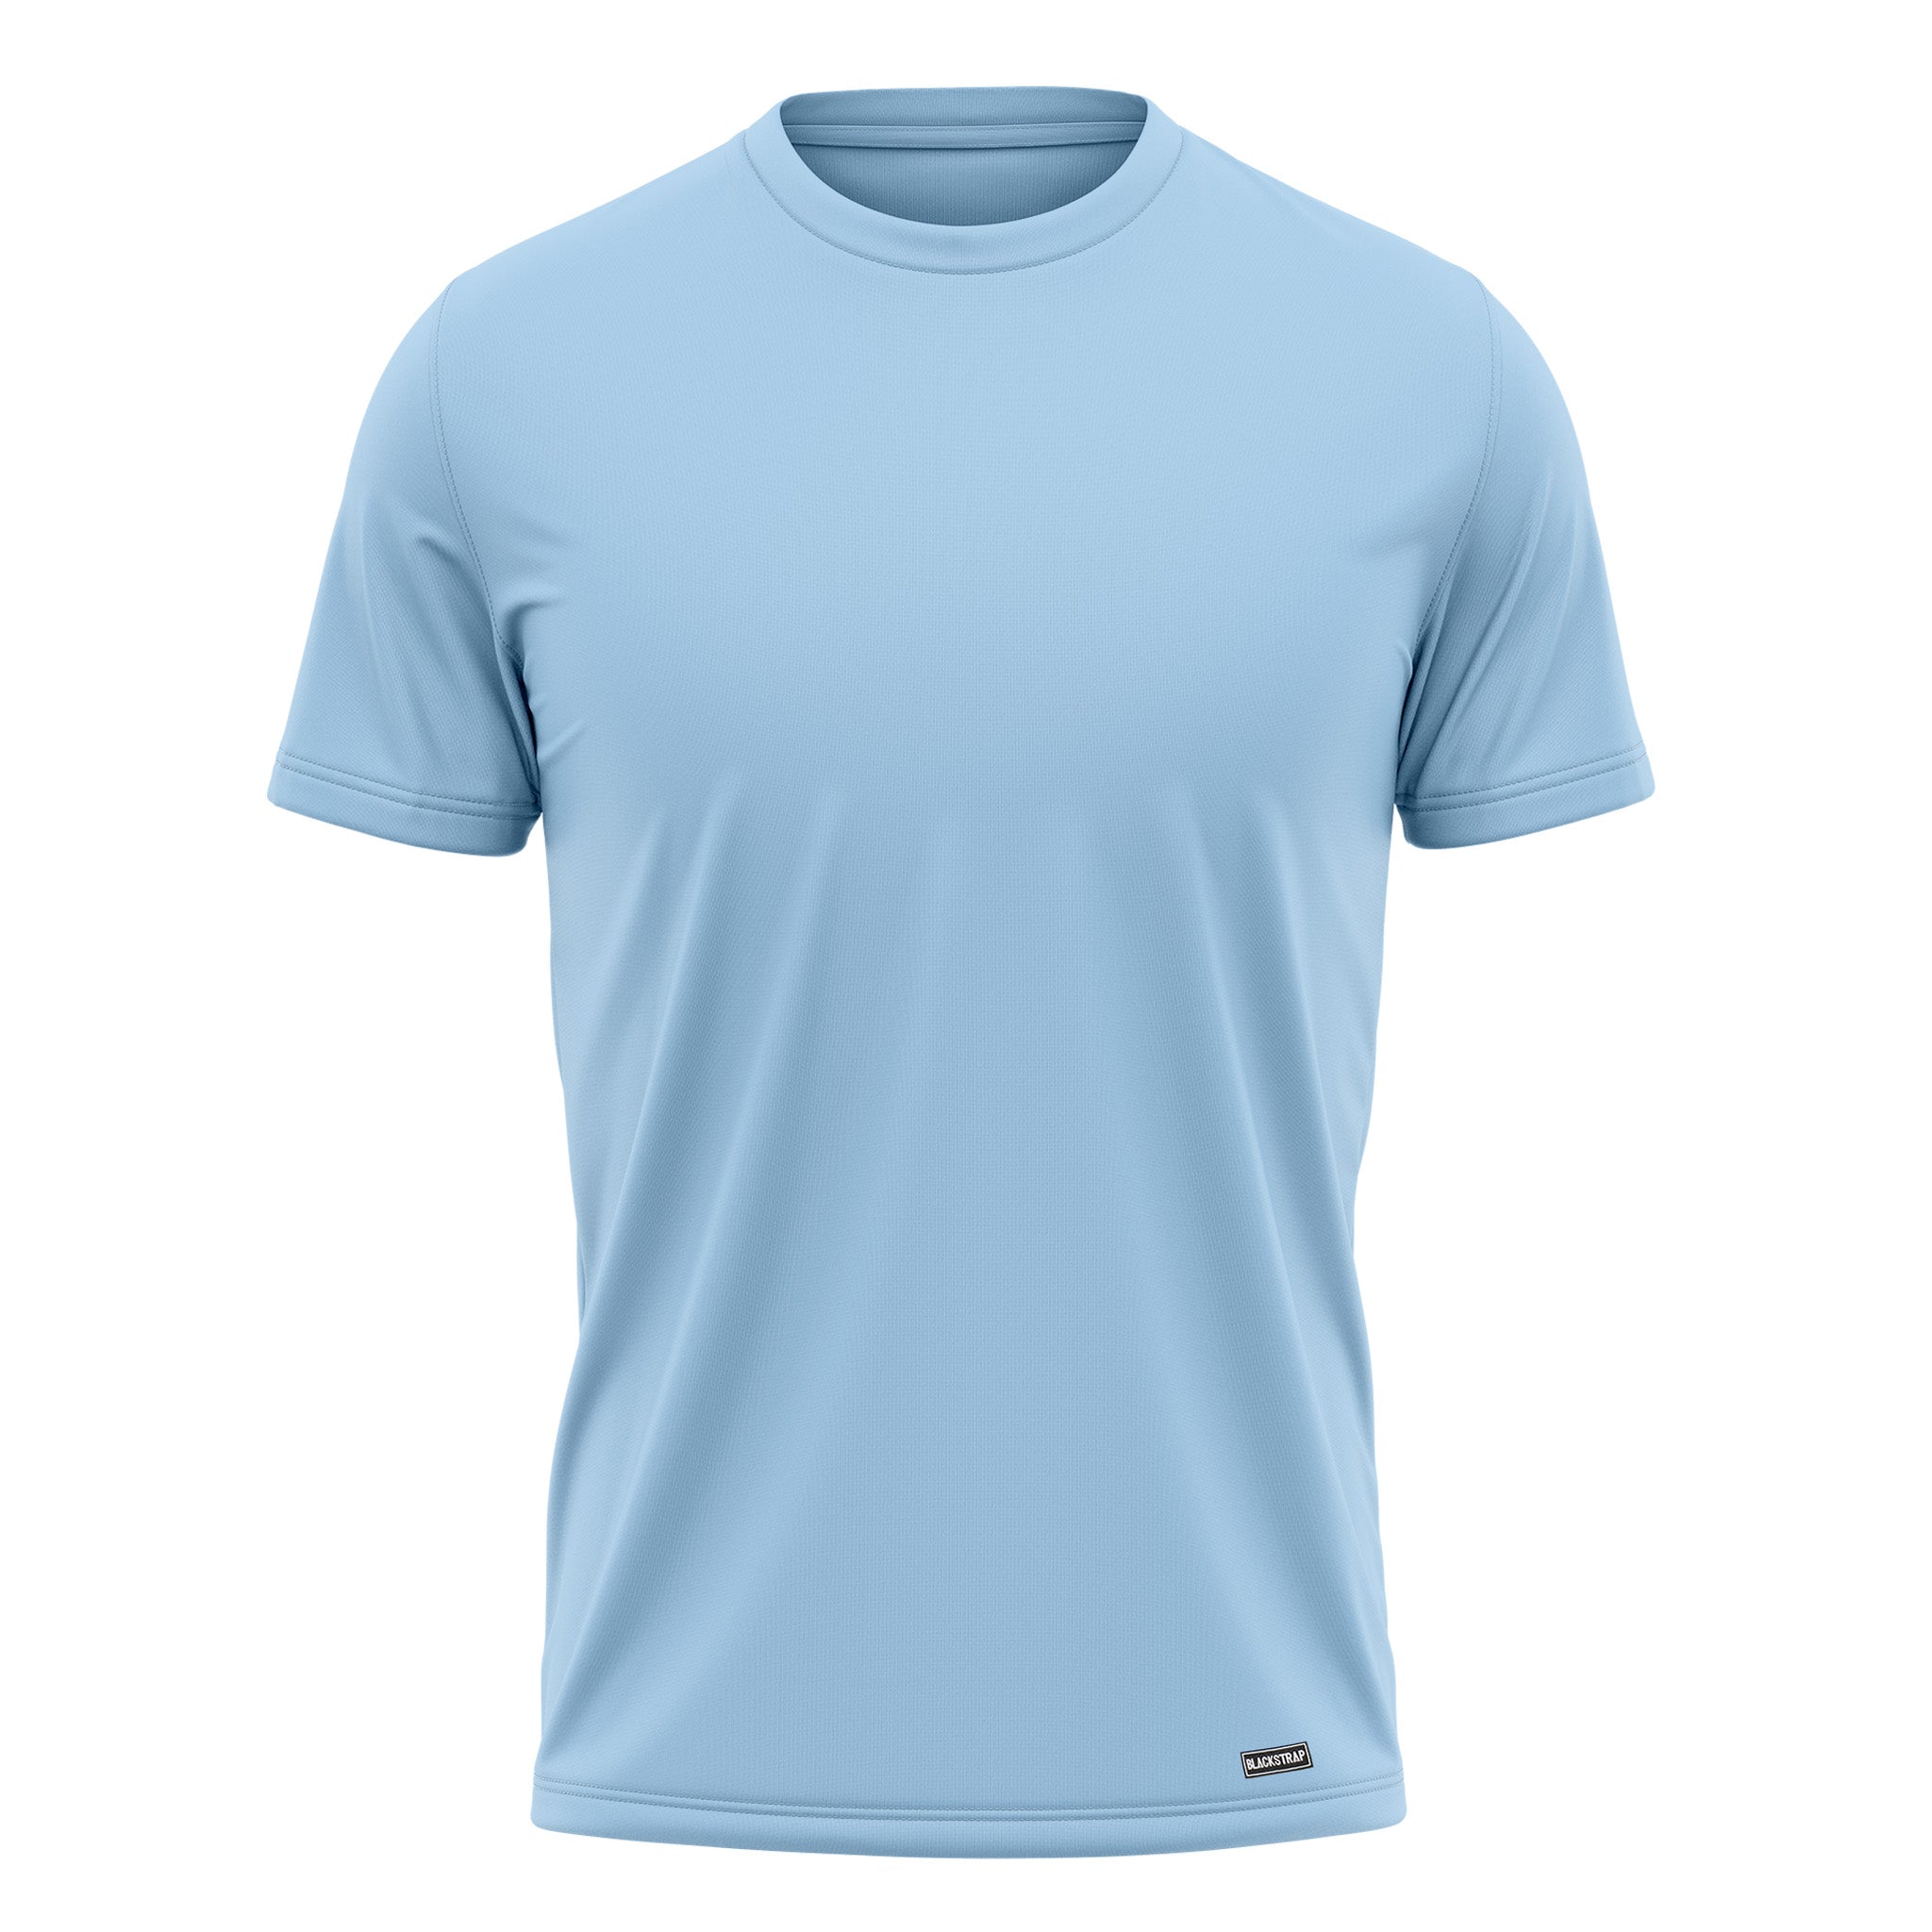 Men's Brackish T-Shirt BlackStrap Bluebird S 